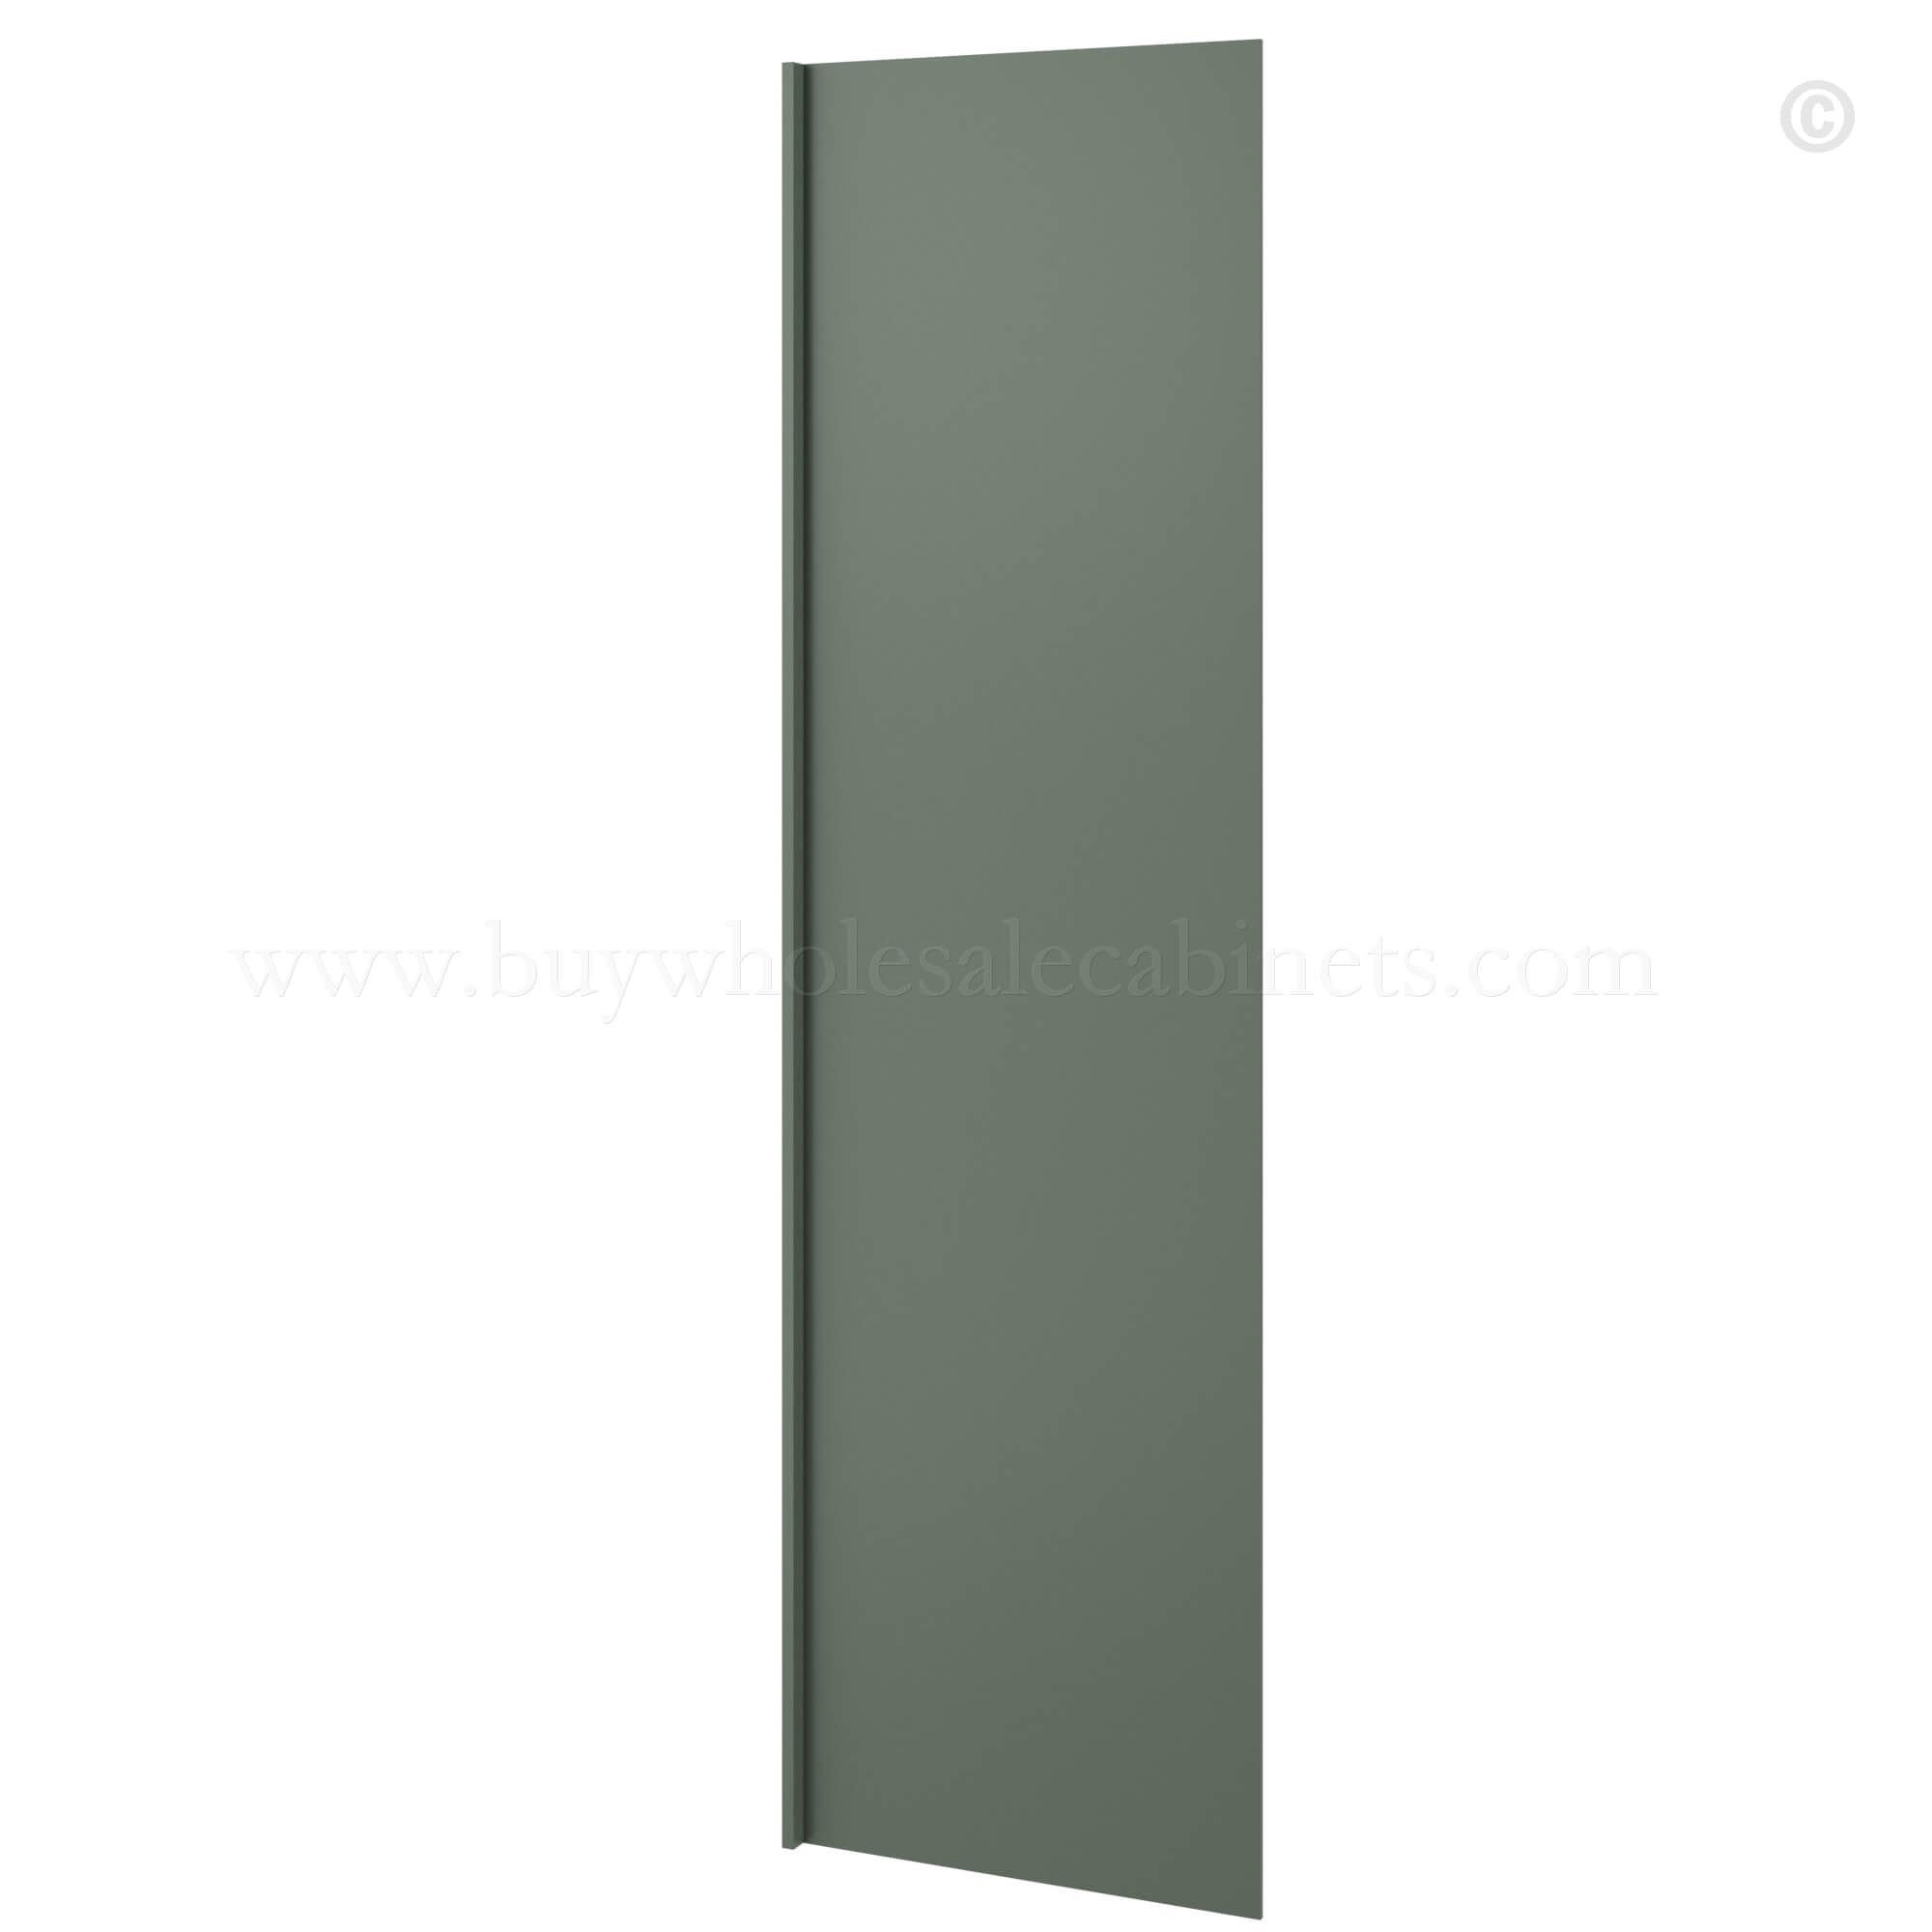 slim shaker green refrigerator return panel, rta cabinets, wholesale cabinets